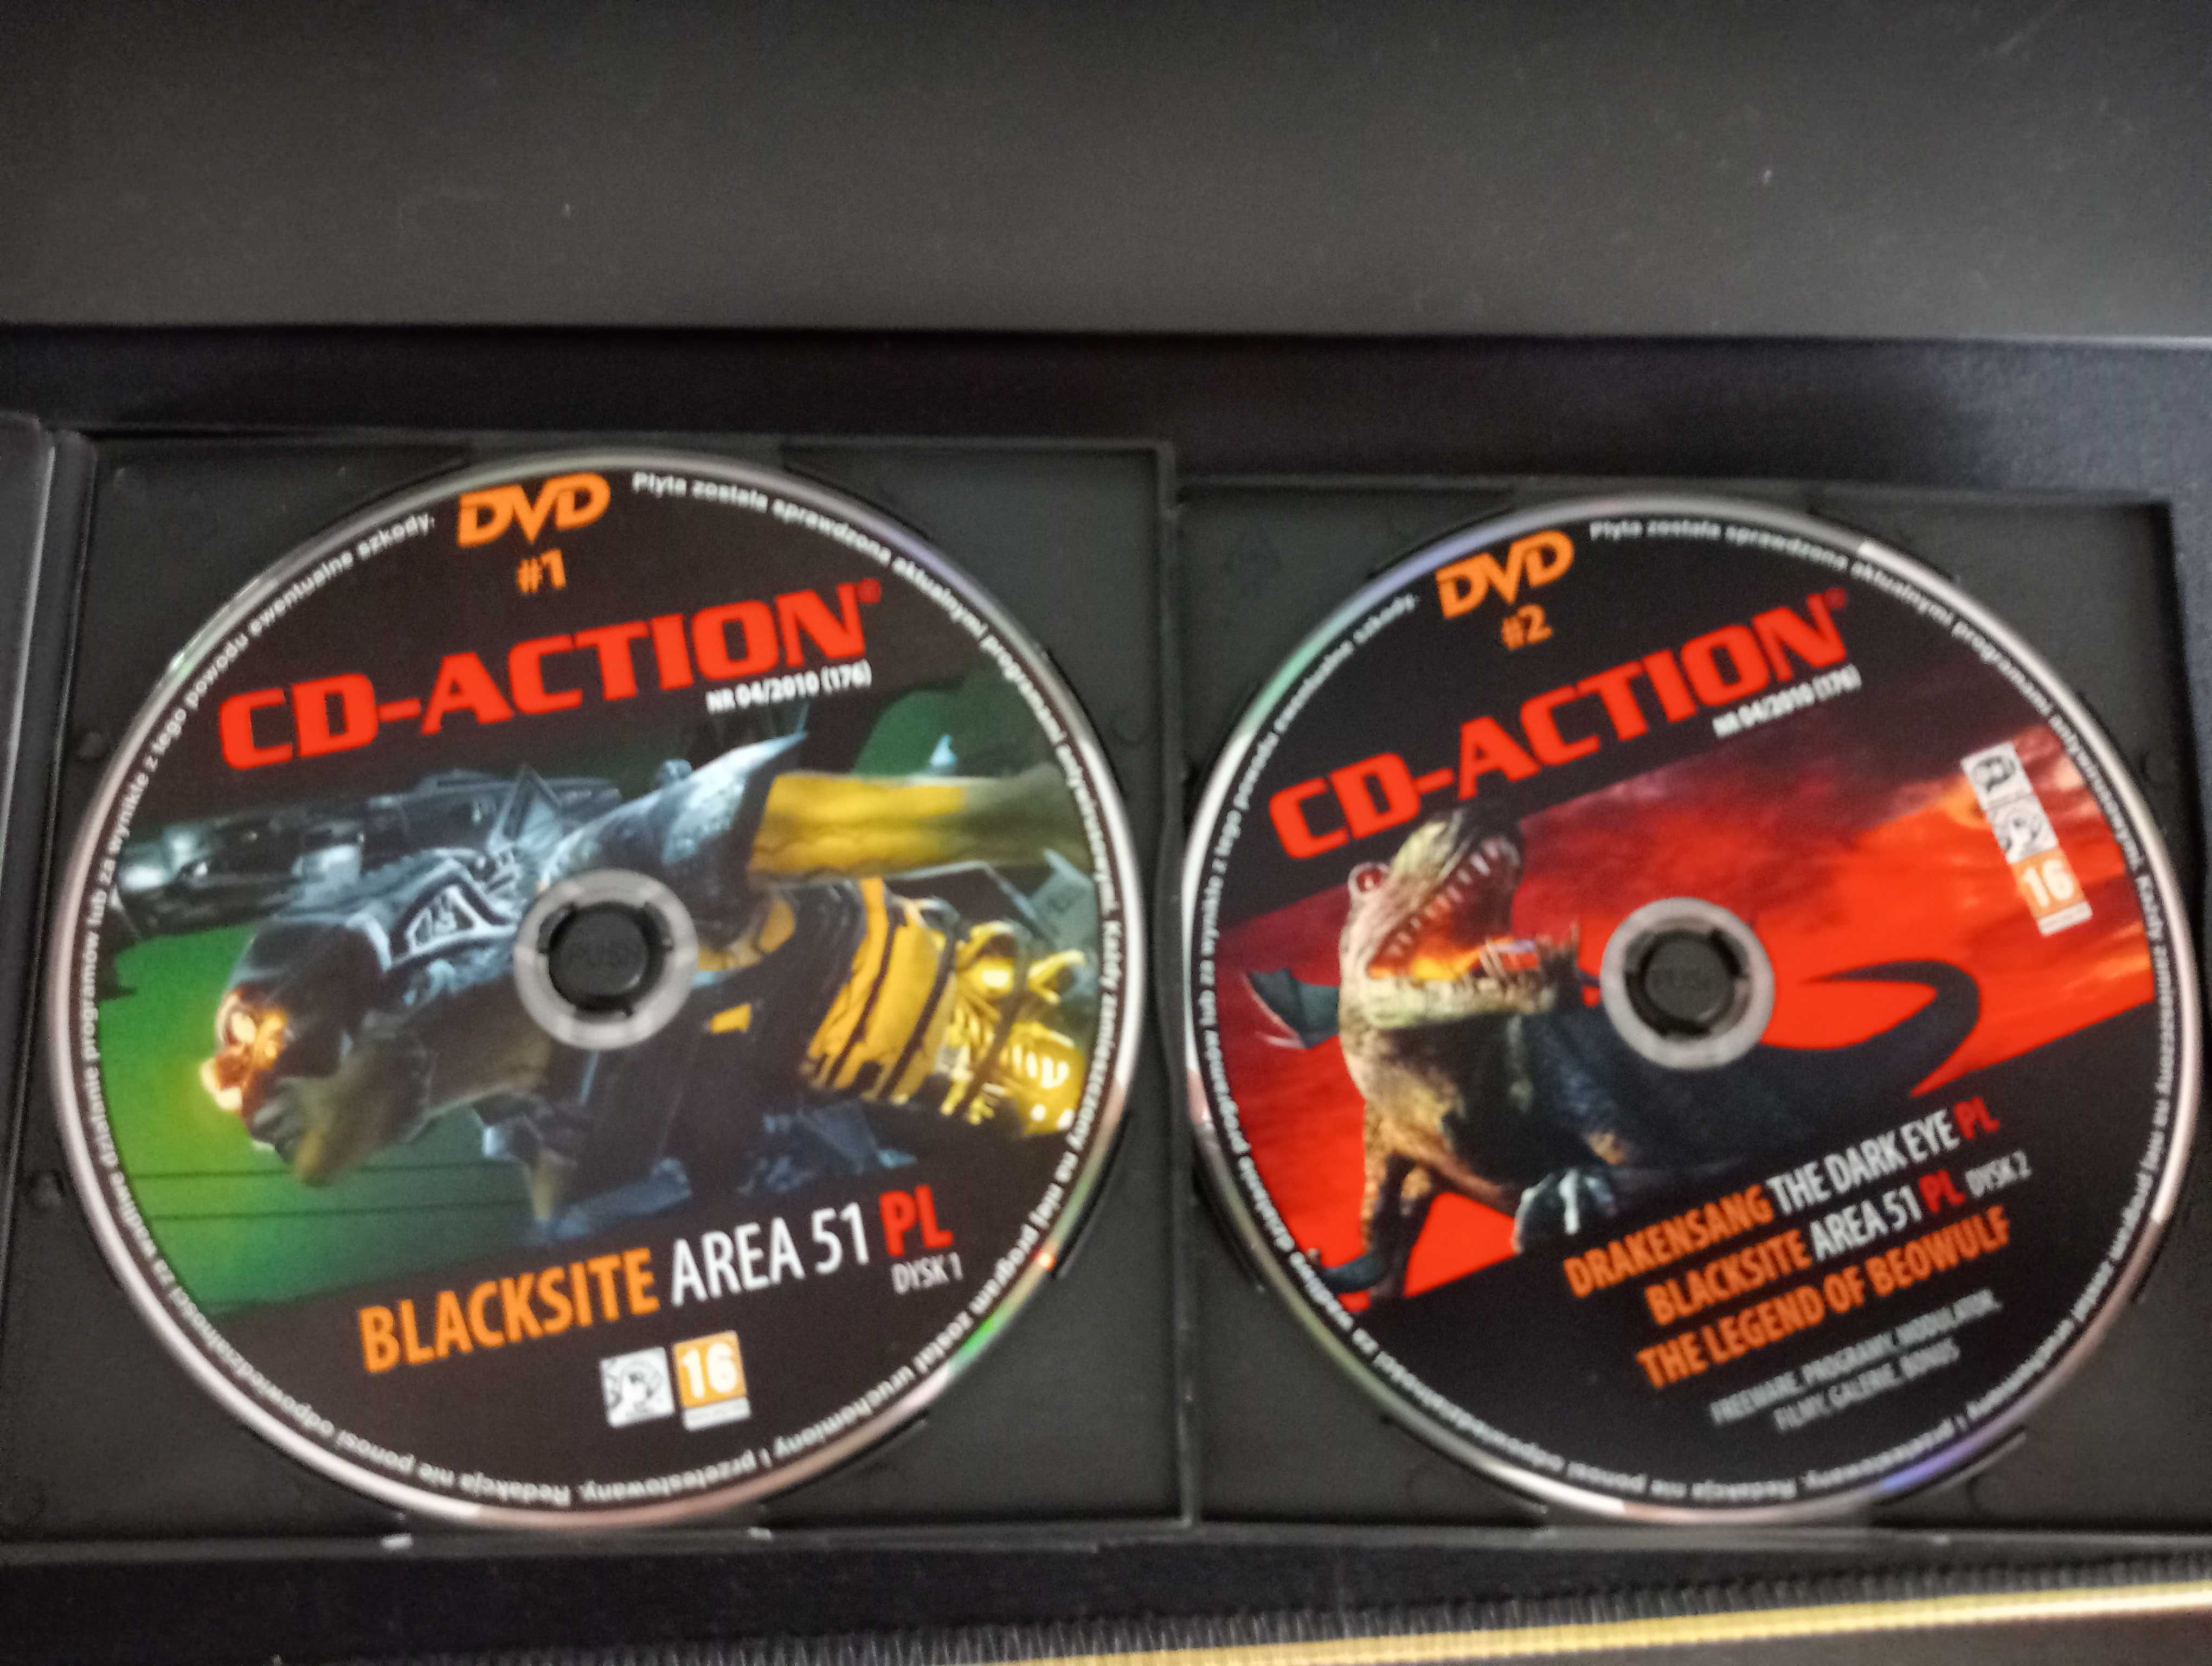 Blacksite Area 51 + Darkensang + Legend of Beowulf PC